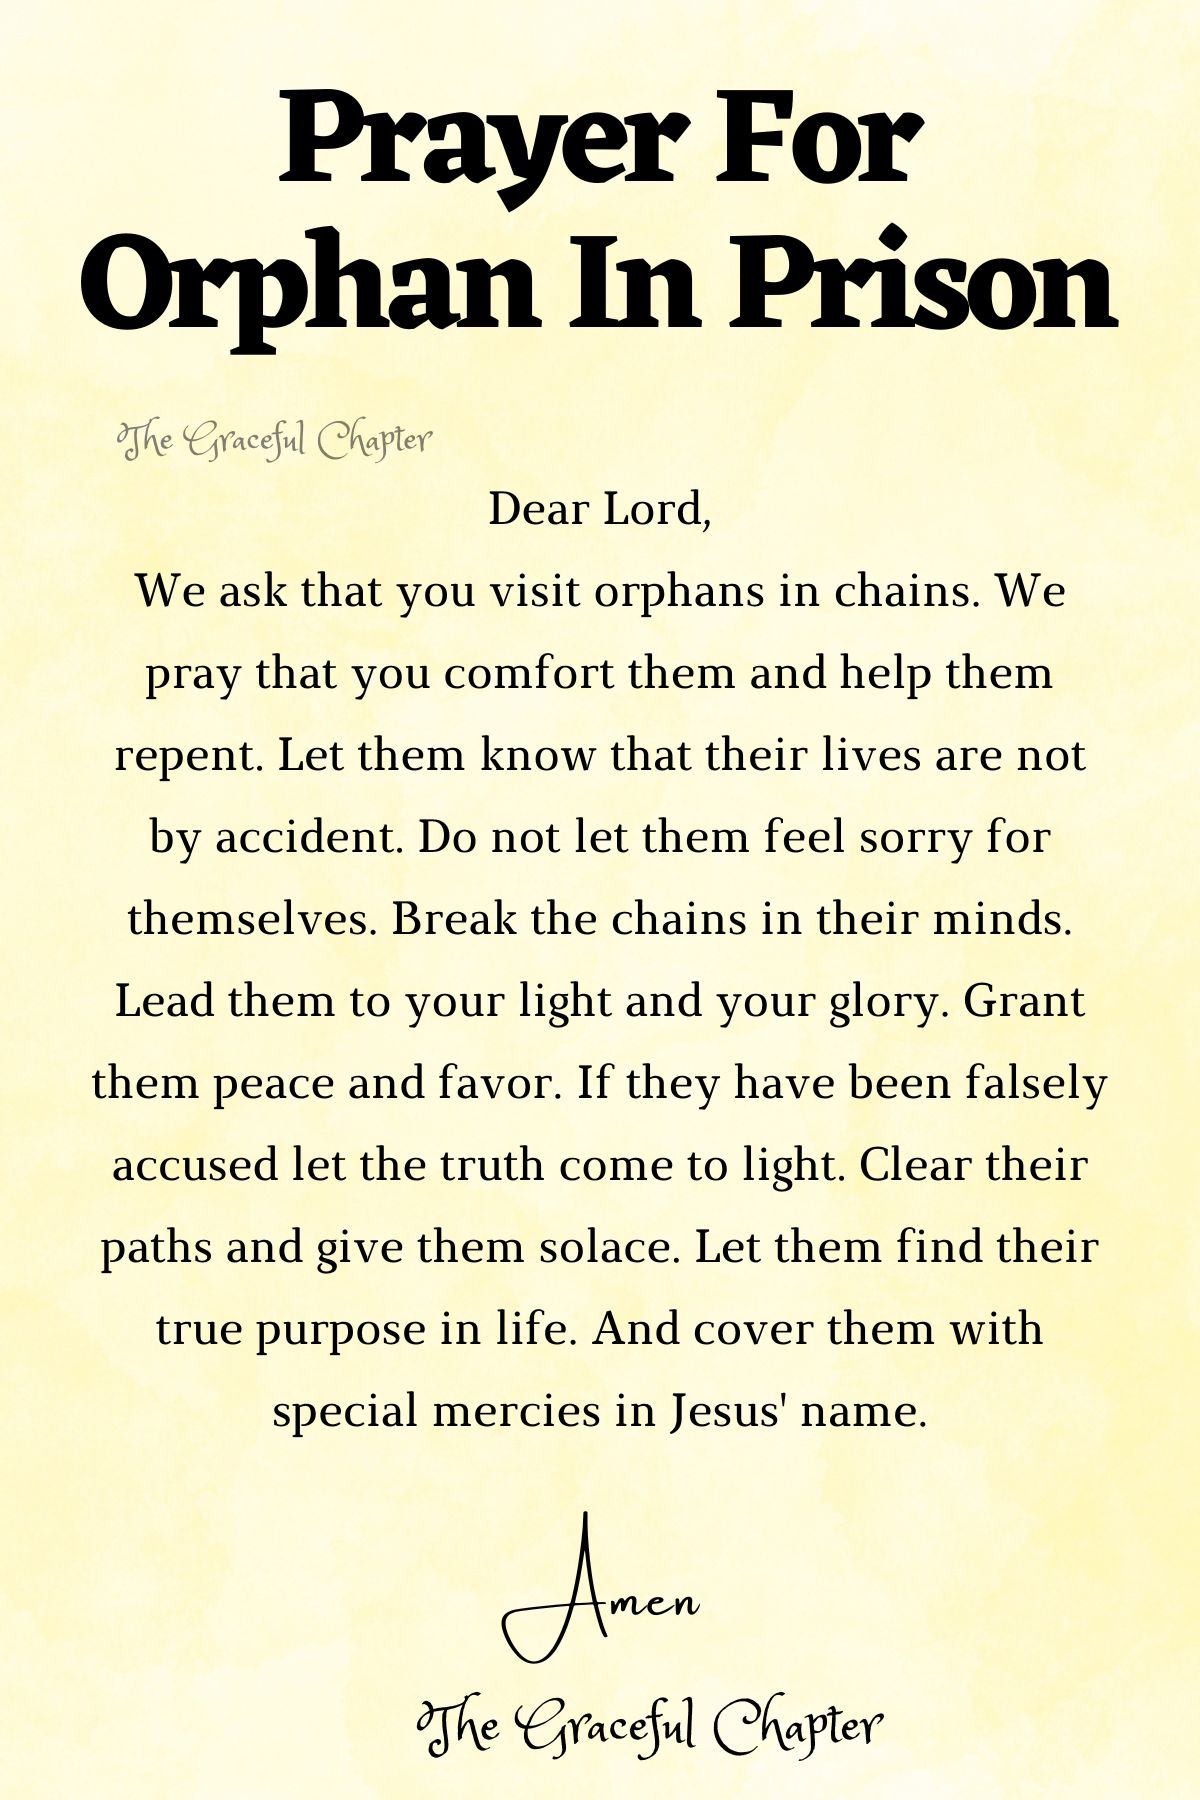 Prayer for ophan in Prison